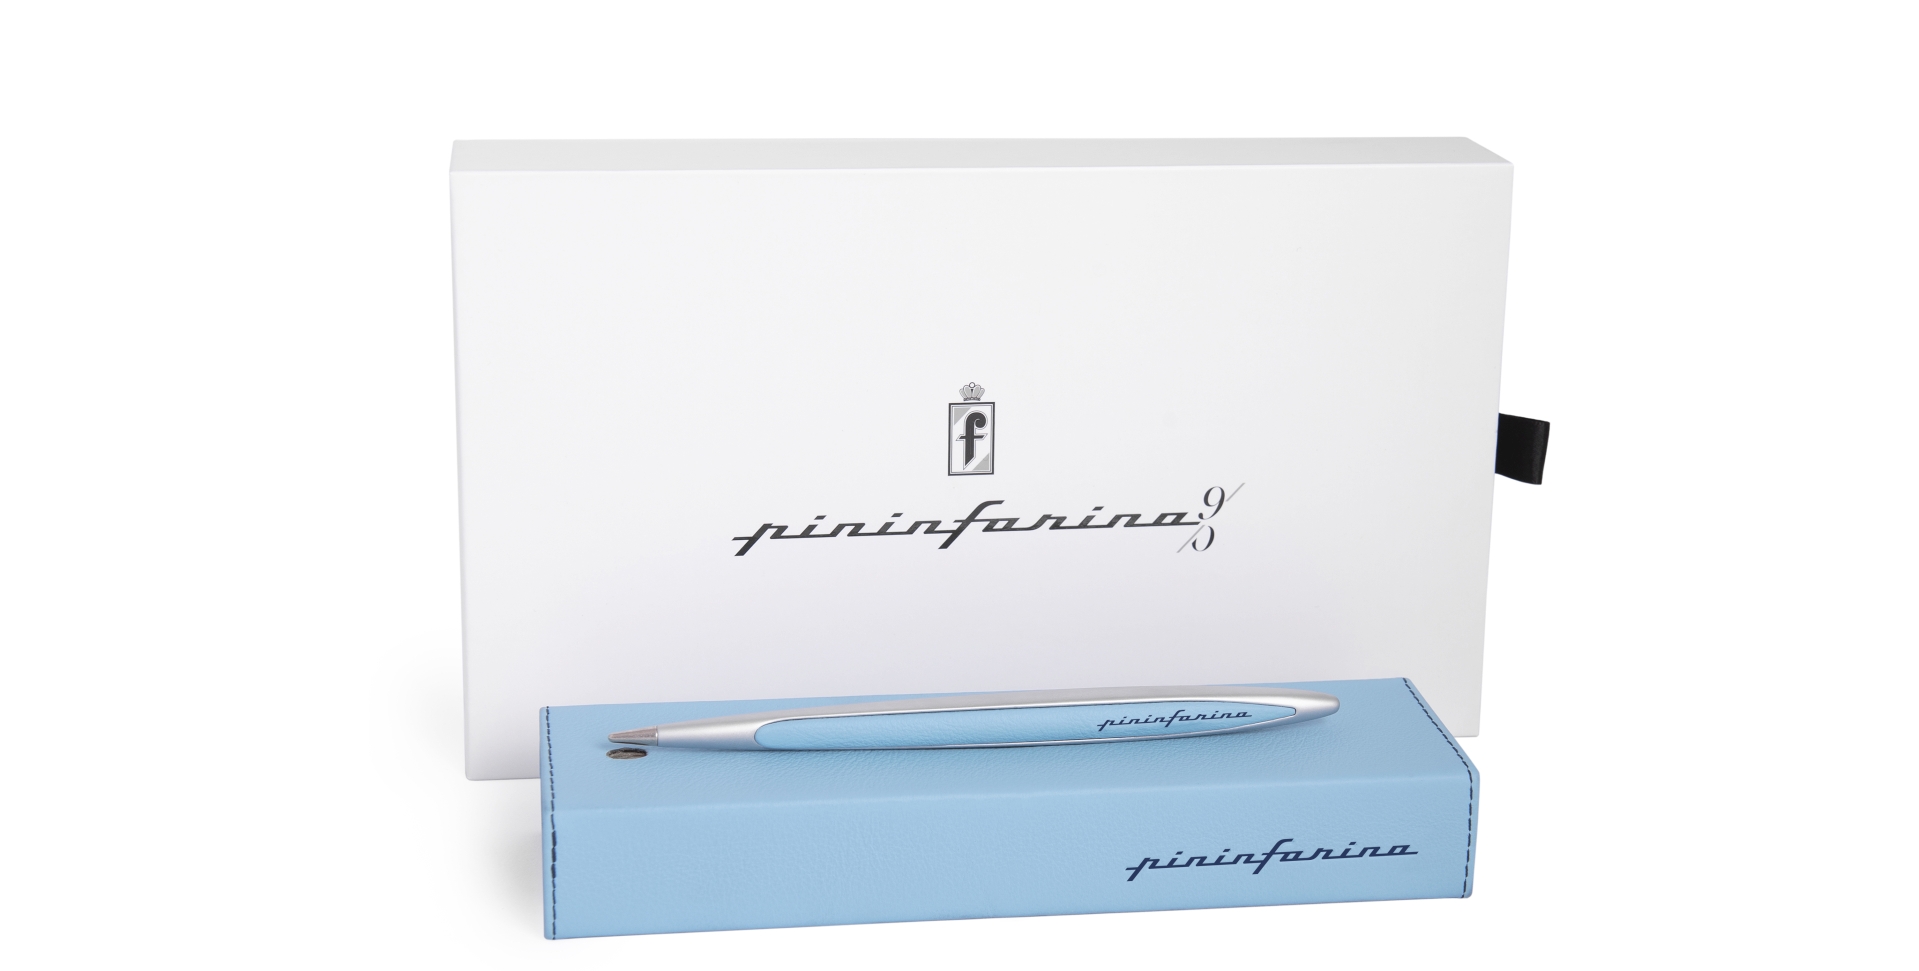 Pininfarina Luxury Leather Limited